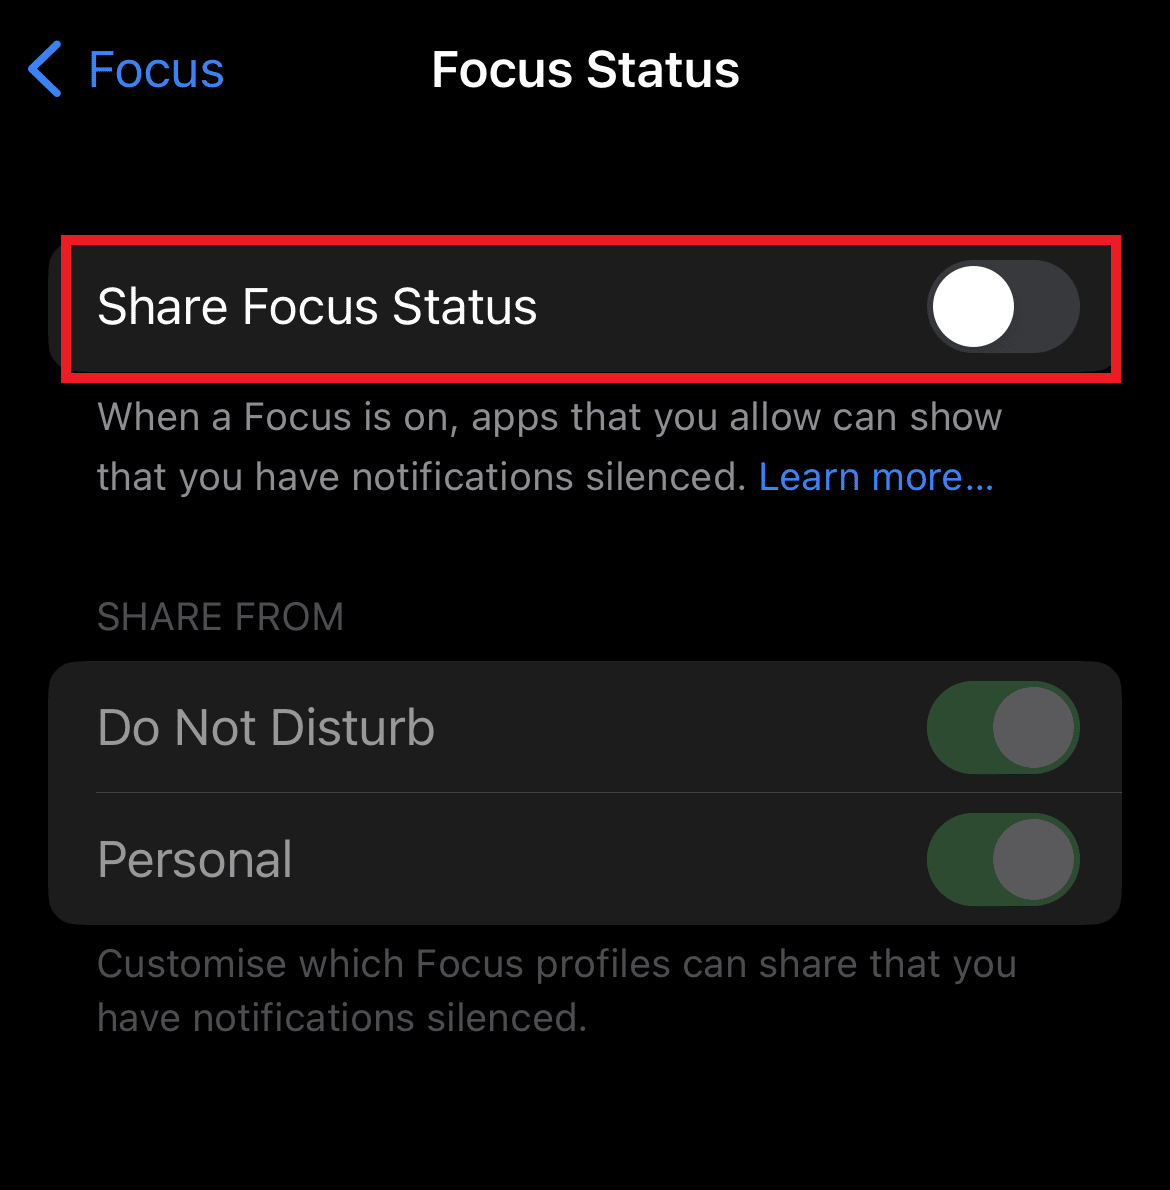 Toggle off Share Focus Status